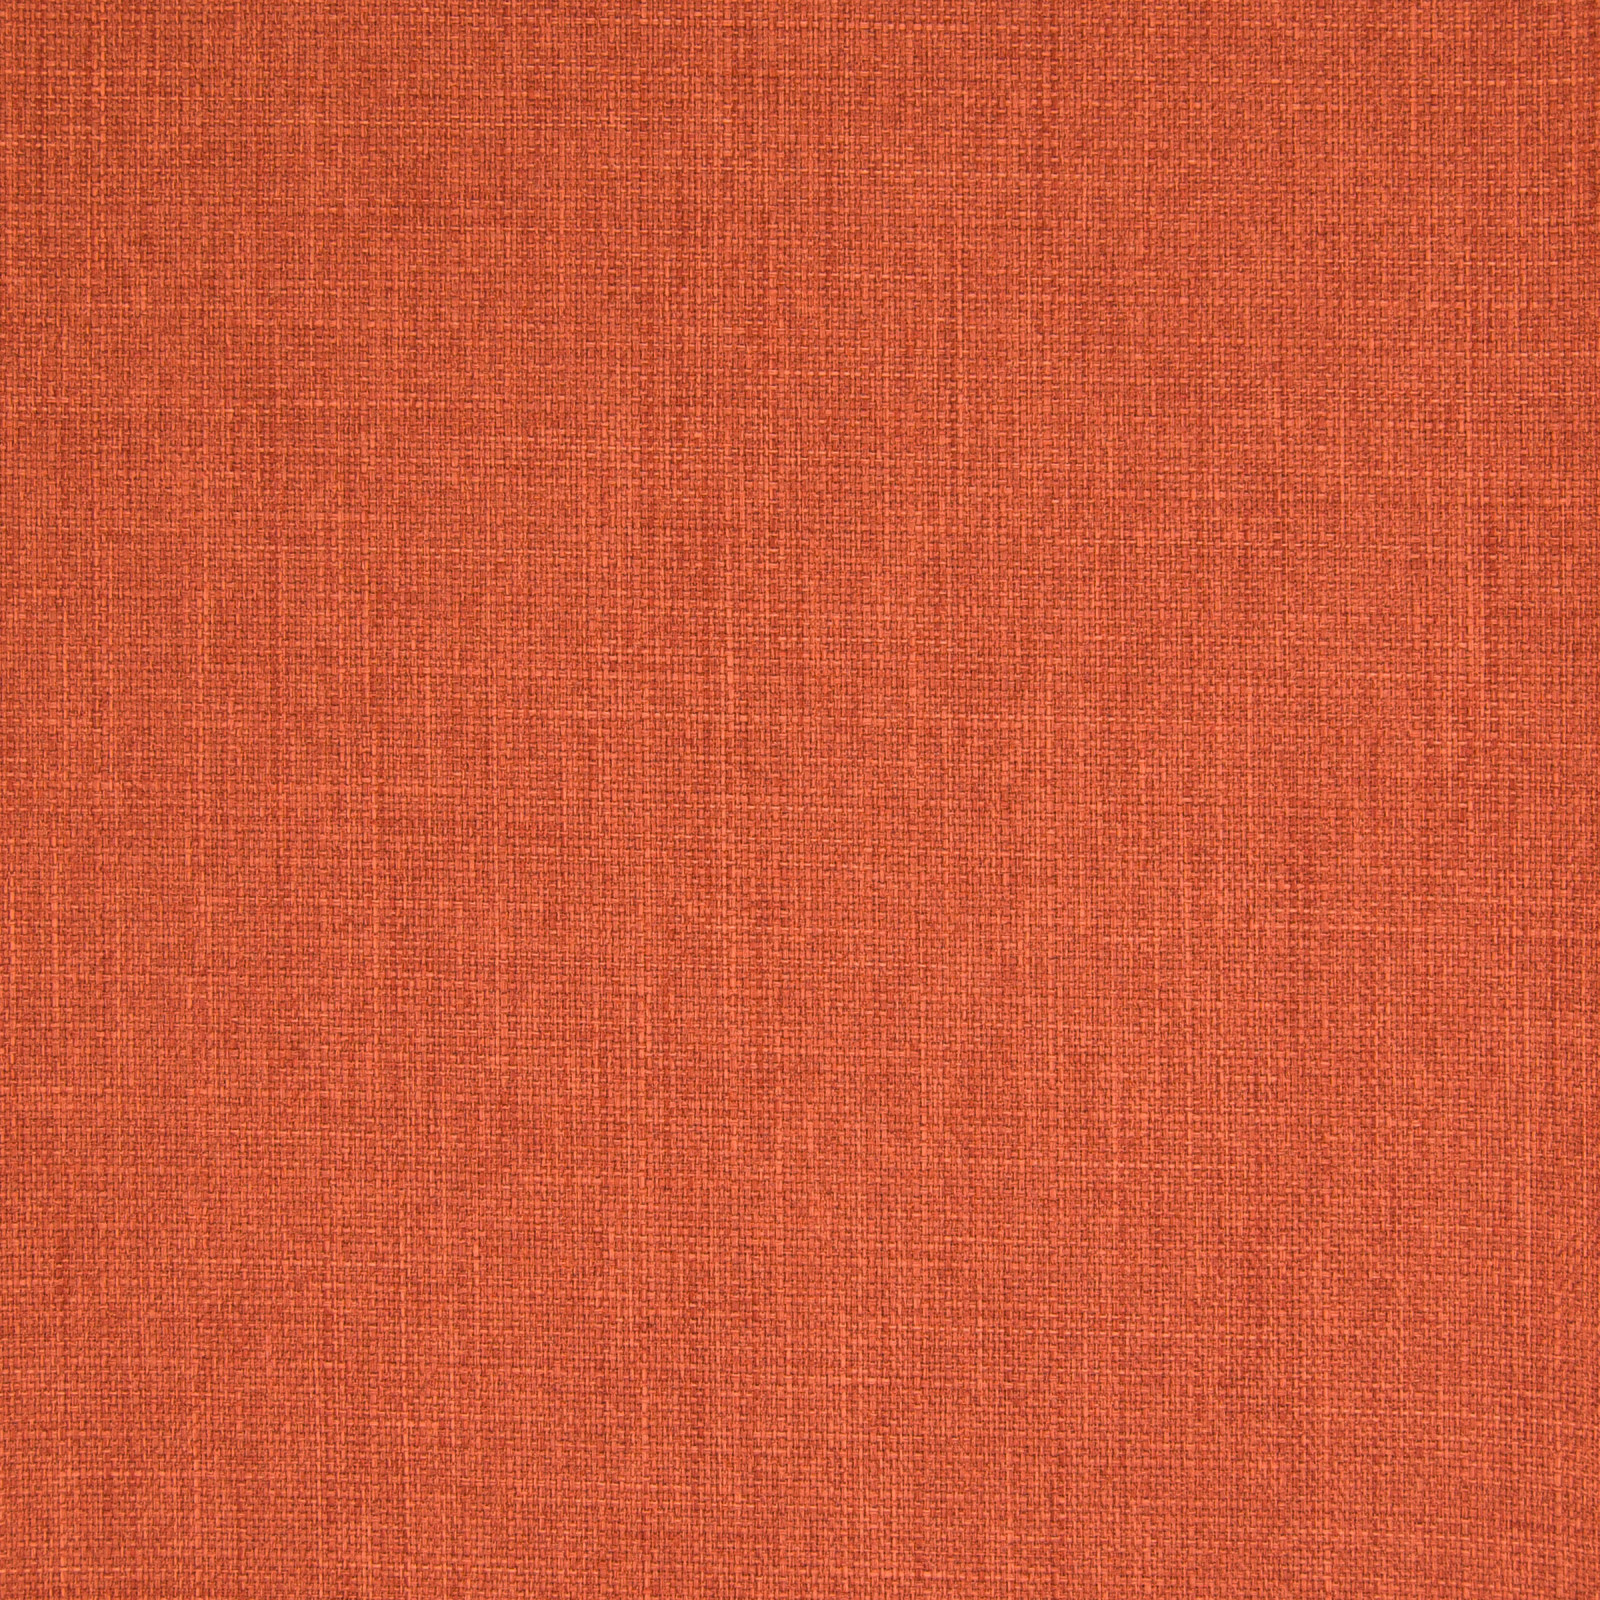 Оранжевая ткань текстура